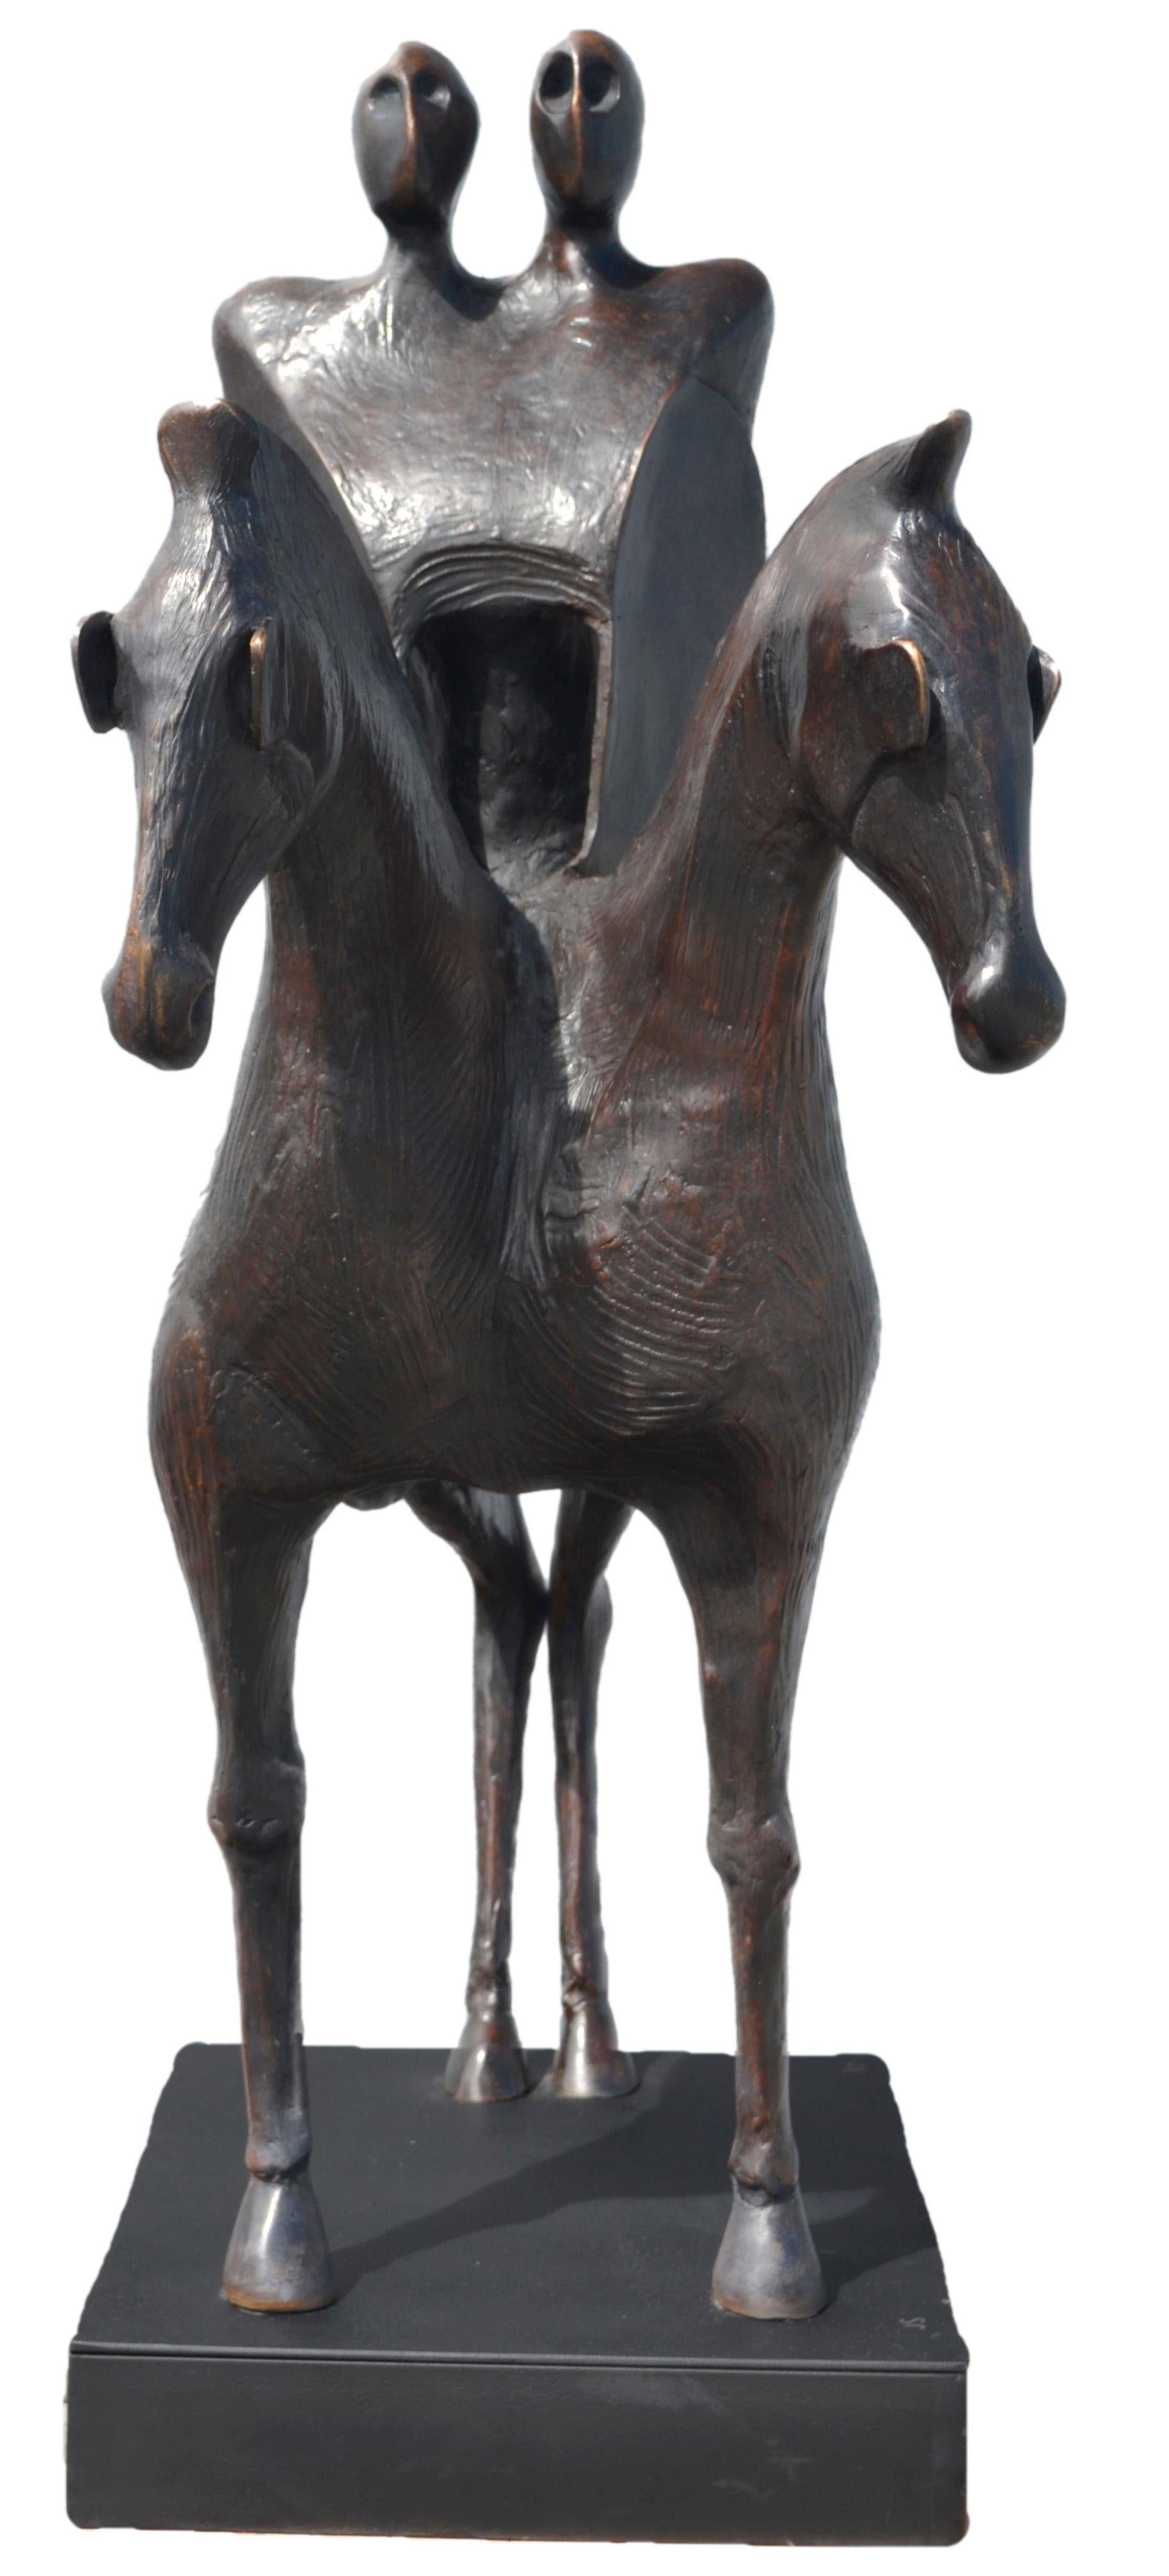 Jorge Seguí,  Falsos Heroes en Caballos Míticos, 2010-2013, bronze, édition 1/7  - Sculpture de Jorge Seguí 